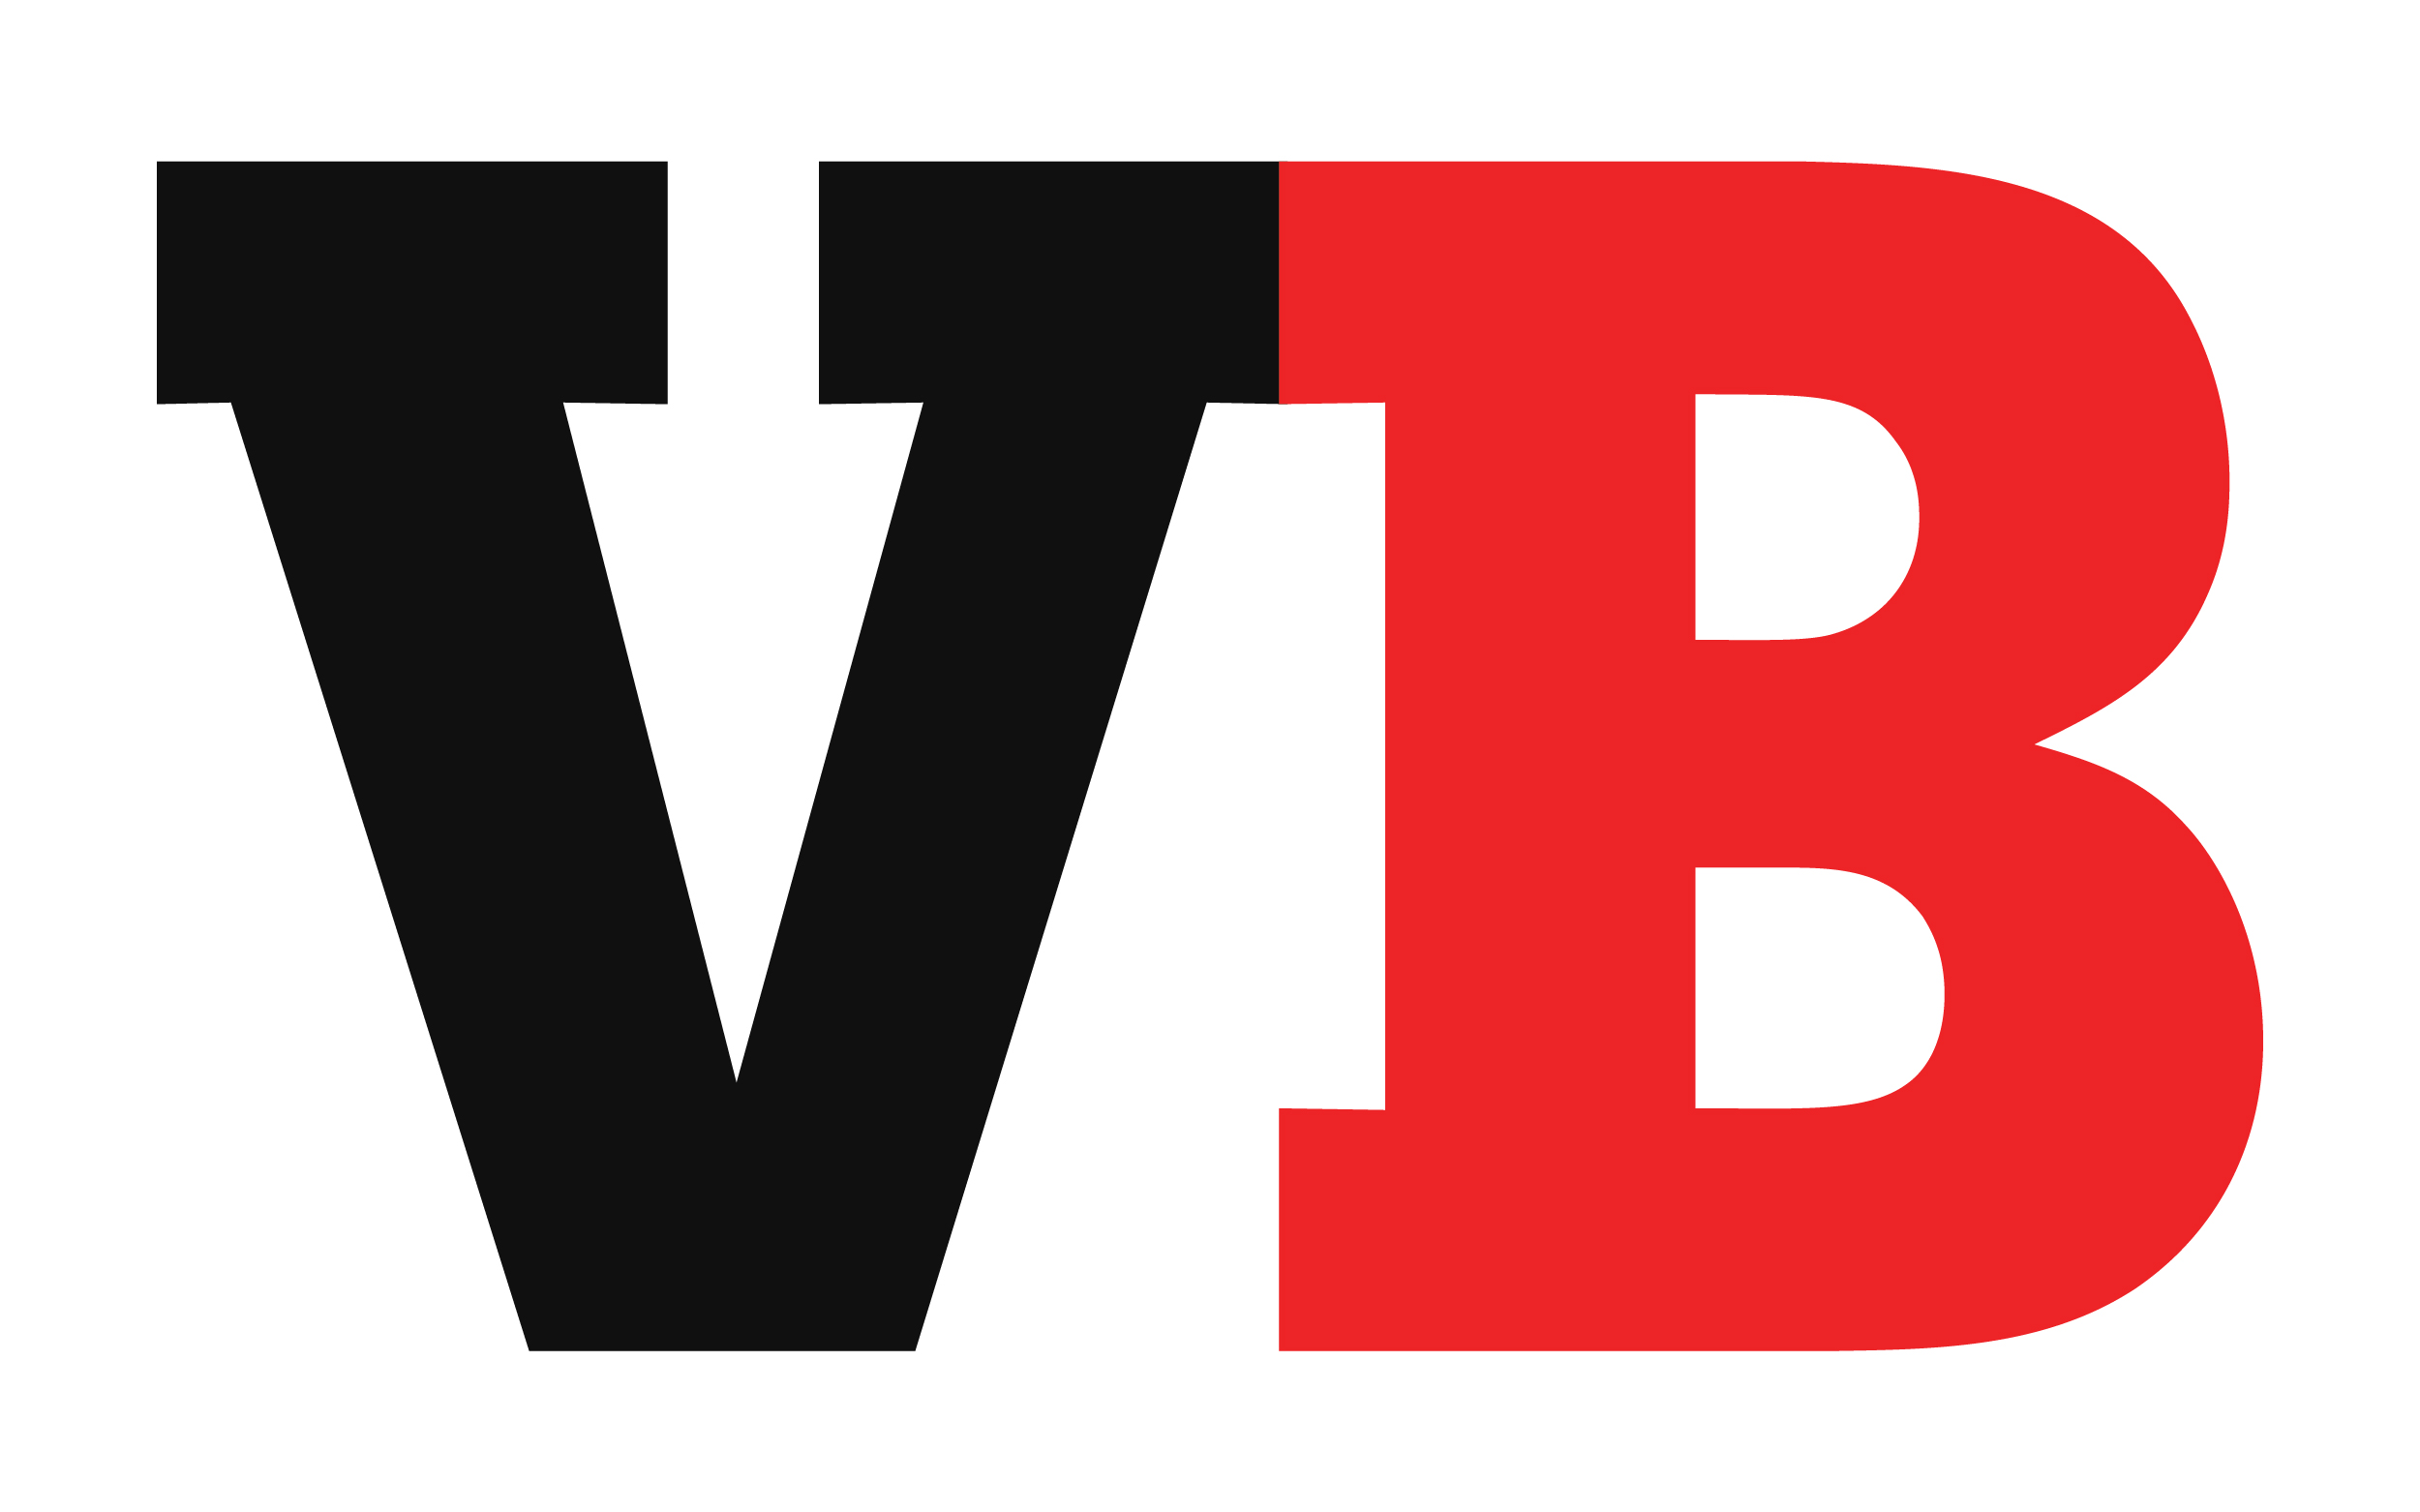 VentureBeat is hiring a staff writer for Social (San Francisco)